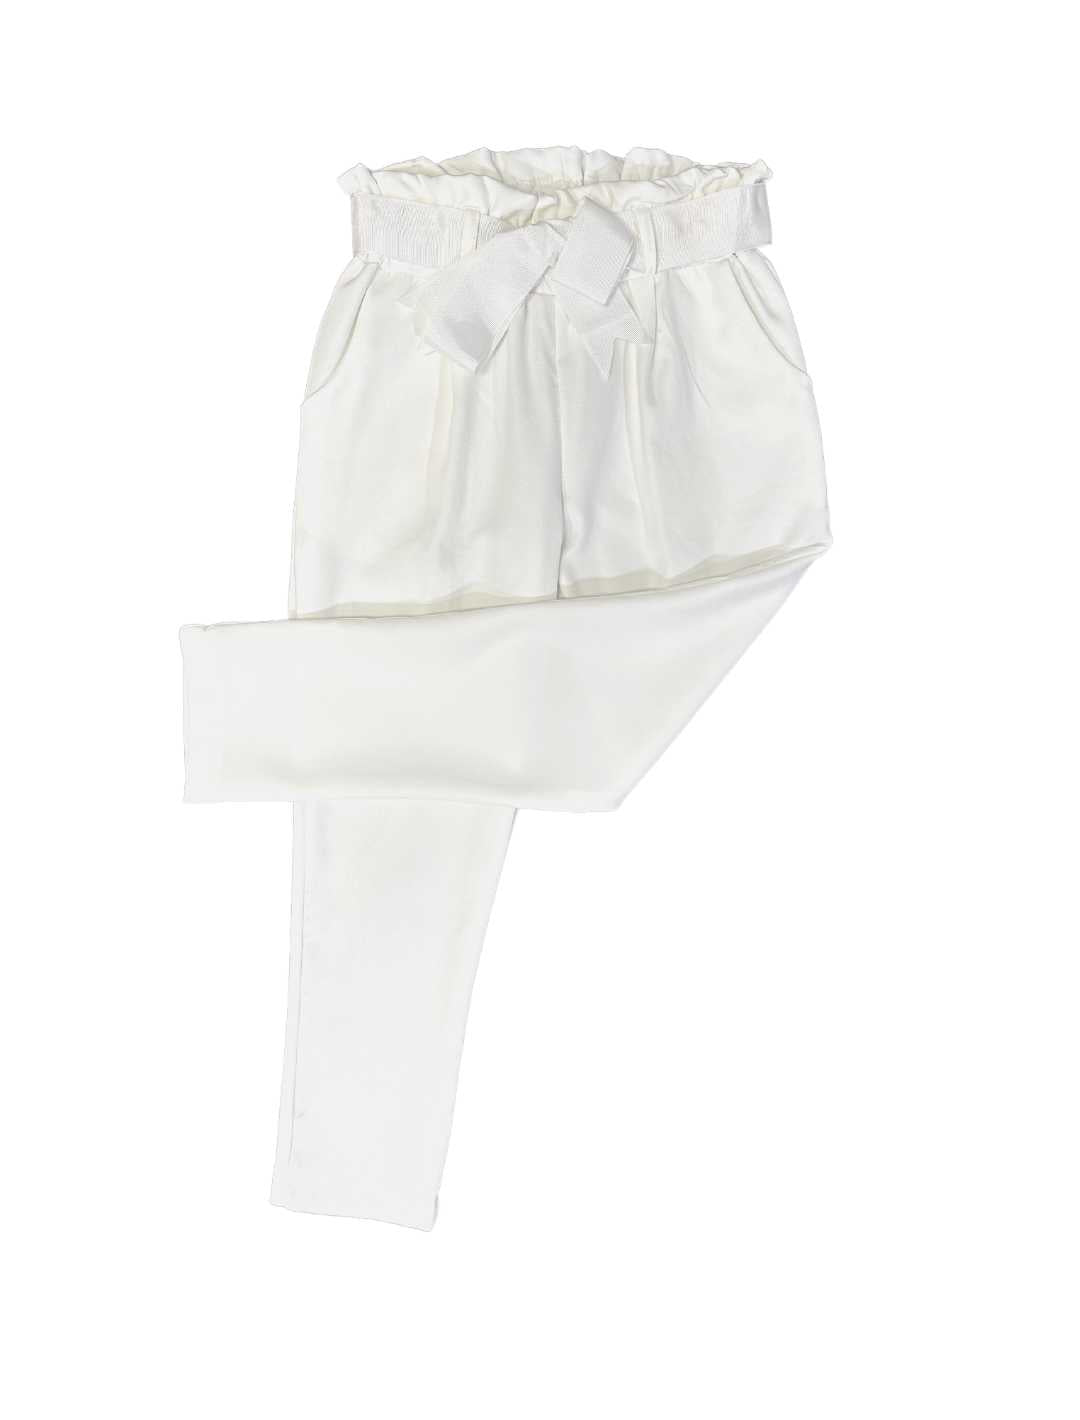 InCity Girls Tween 7-14 Years White Ribbon Belt Elastic Waist Straight Leg  Comfy Fashion Dress Pants